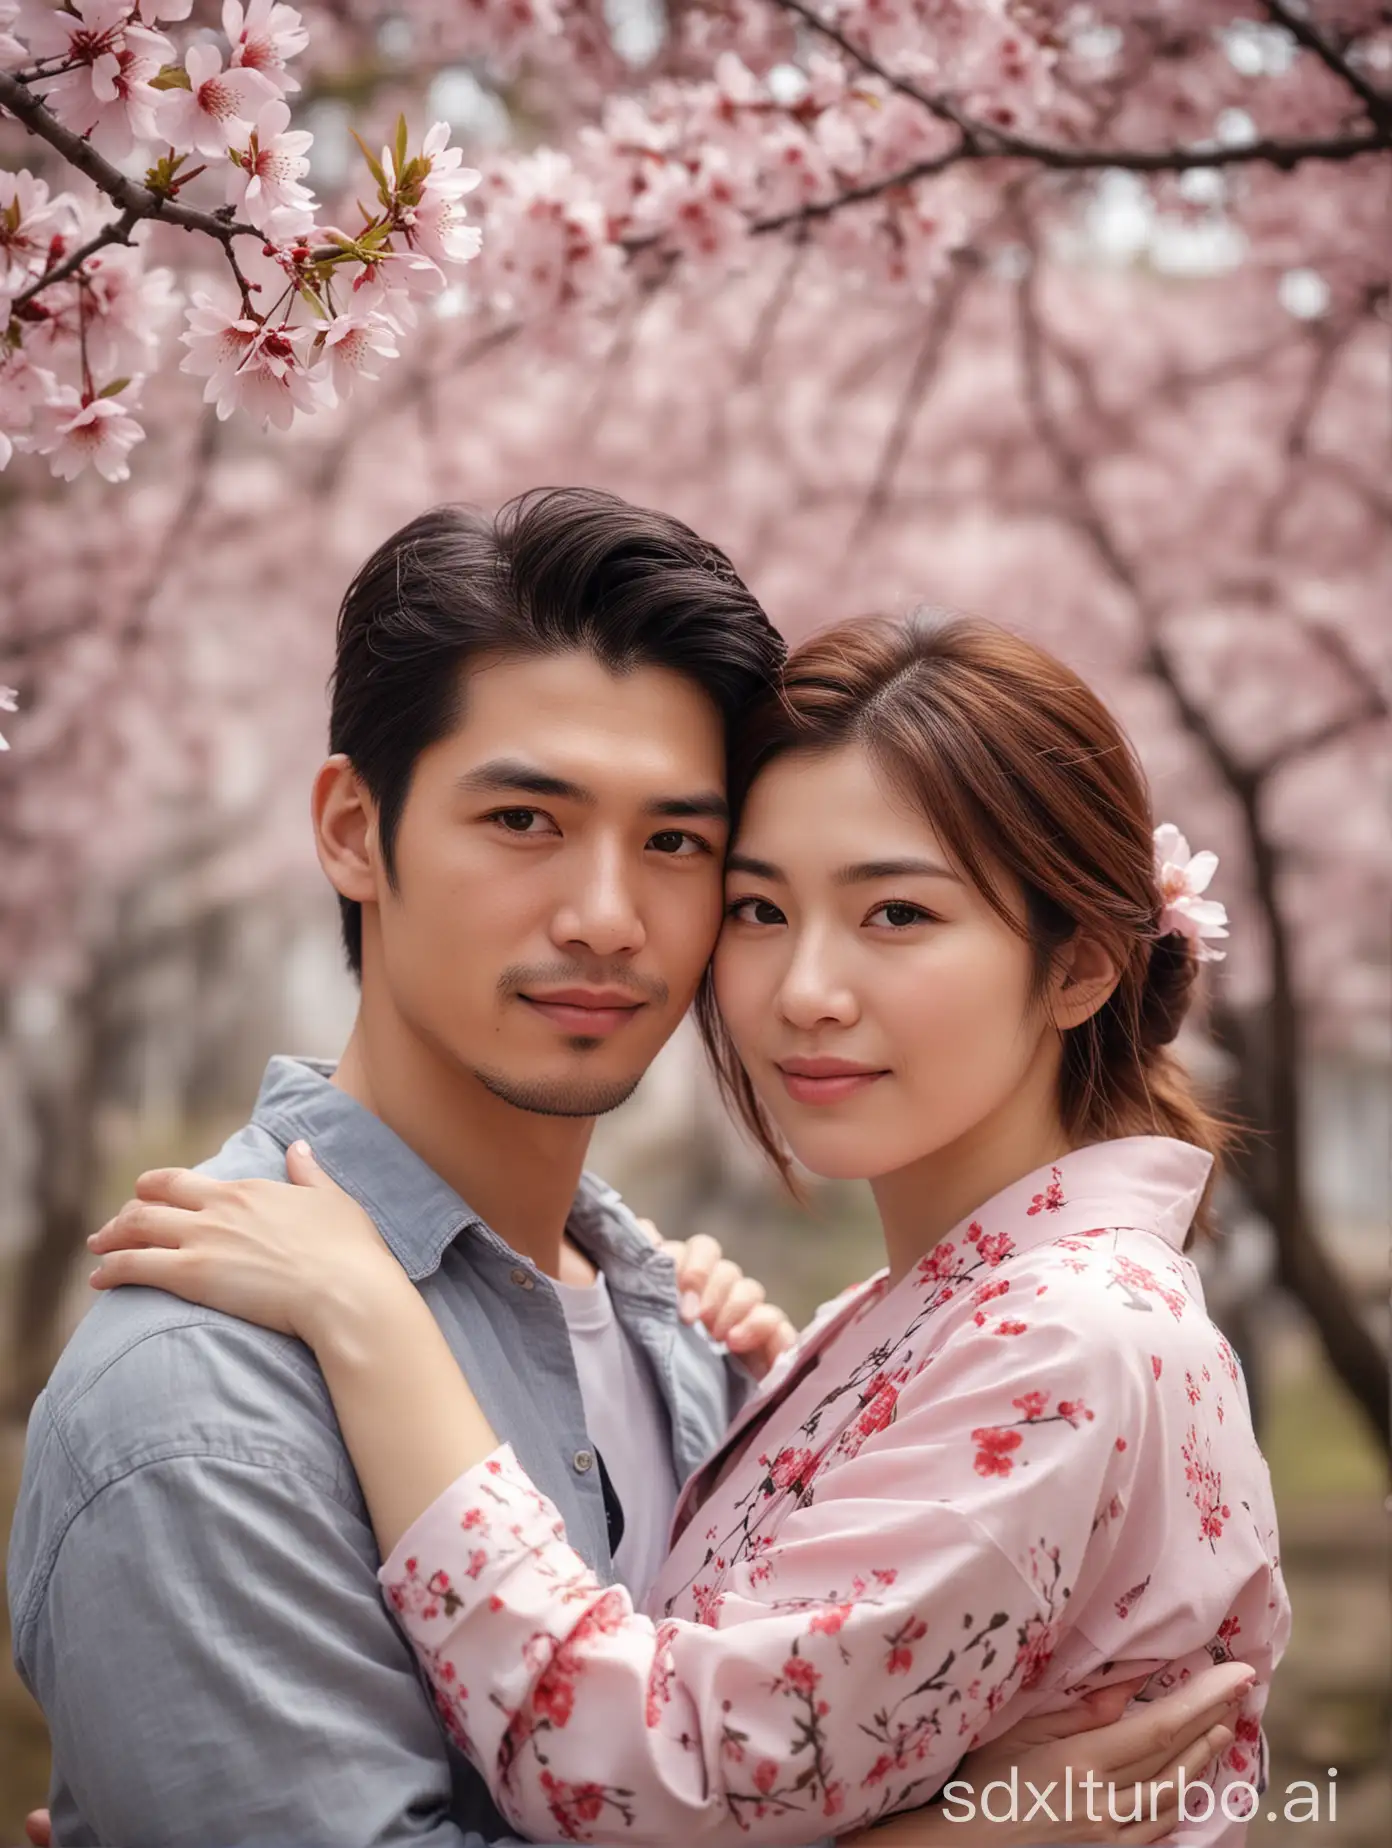 Romantic-Couple-Embracing-Amid-Sakura-Blossoms-High-Resolution-Photo